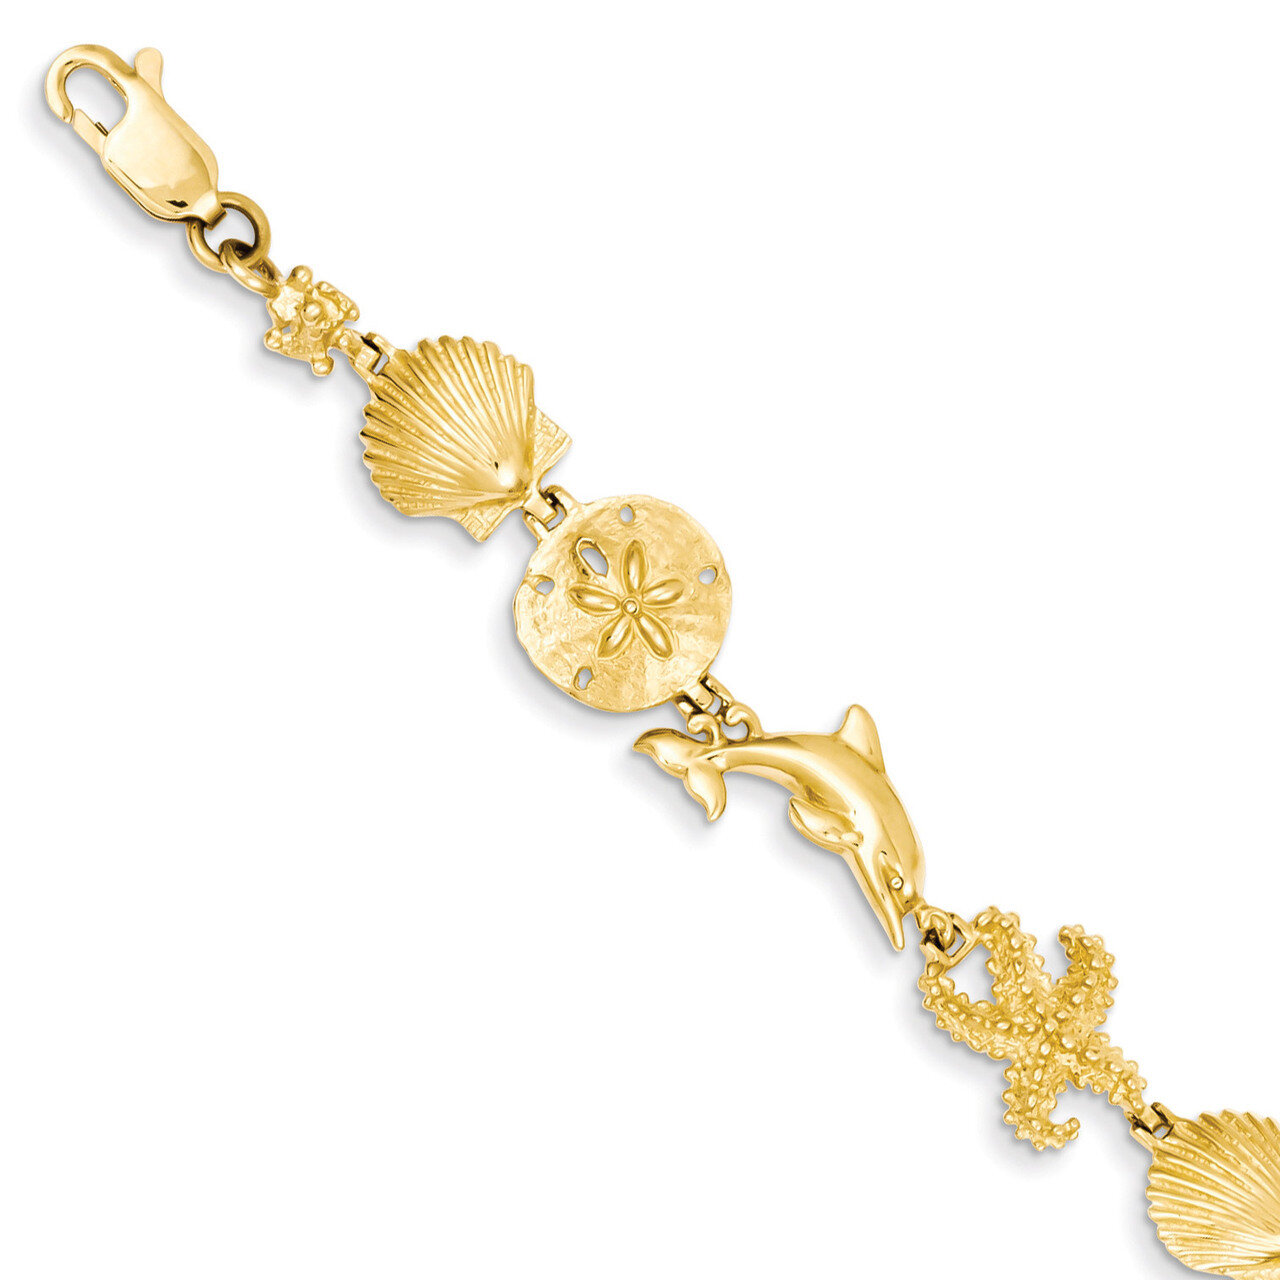 Seashore Theme Bracelet 7.25 Inch 14k Gold FB1116-7.25